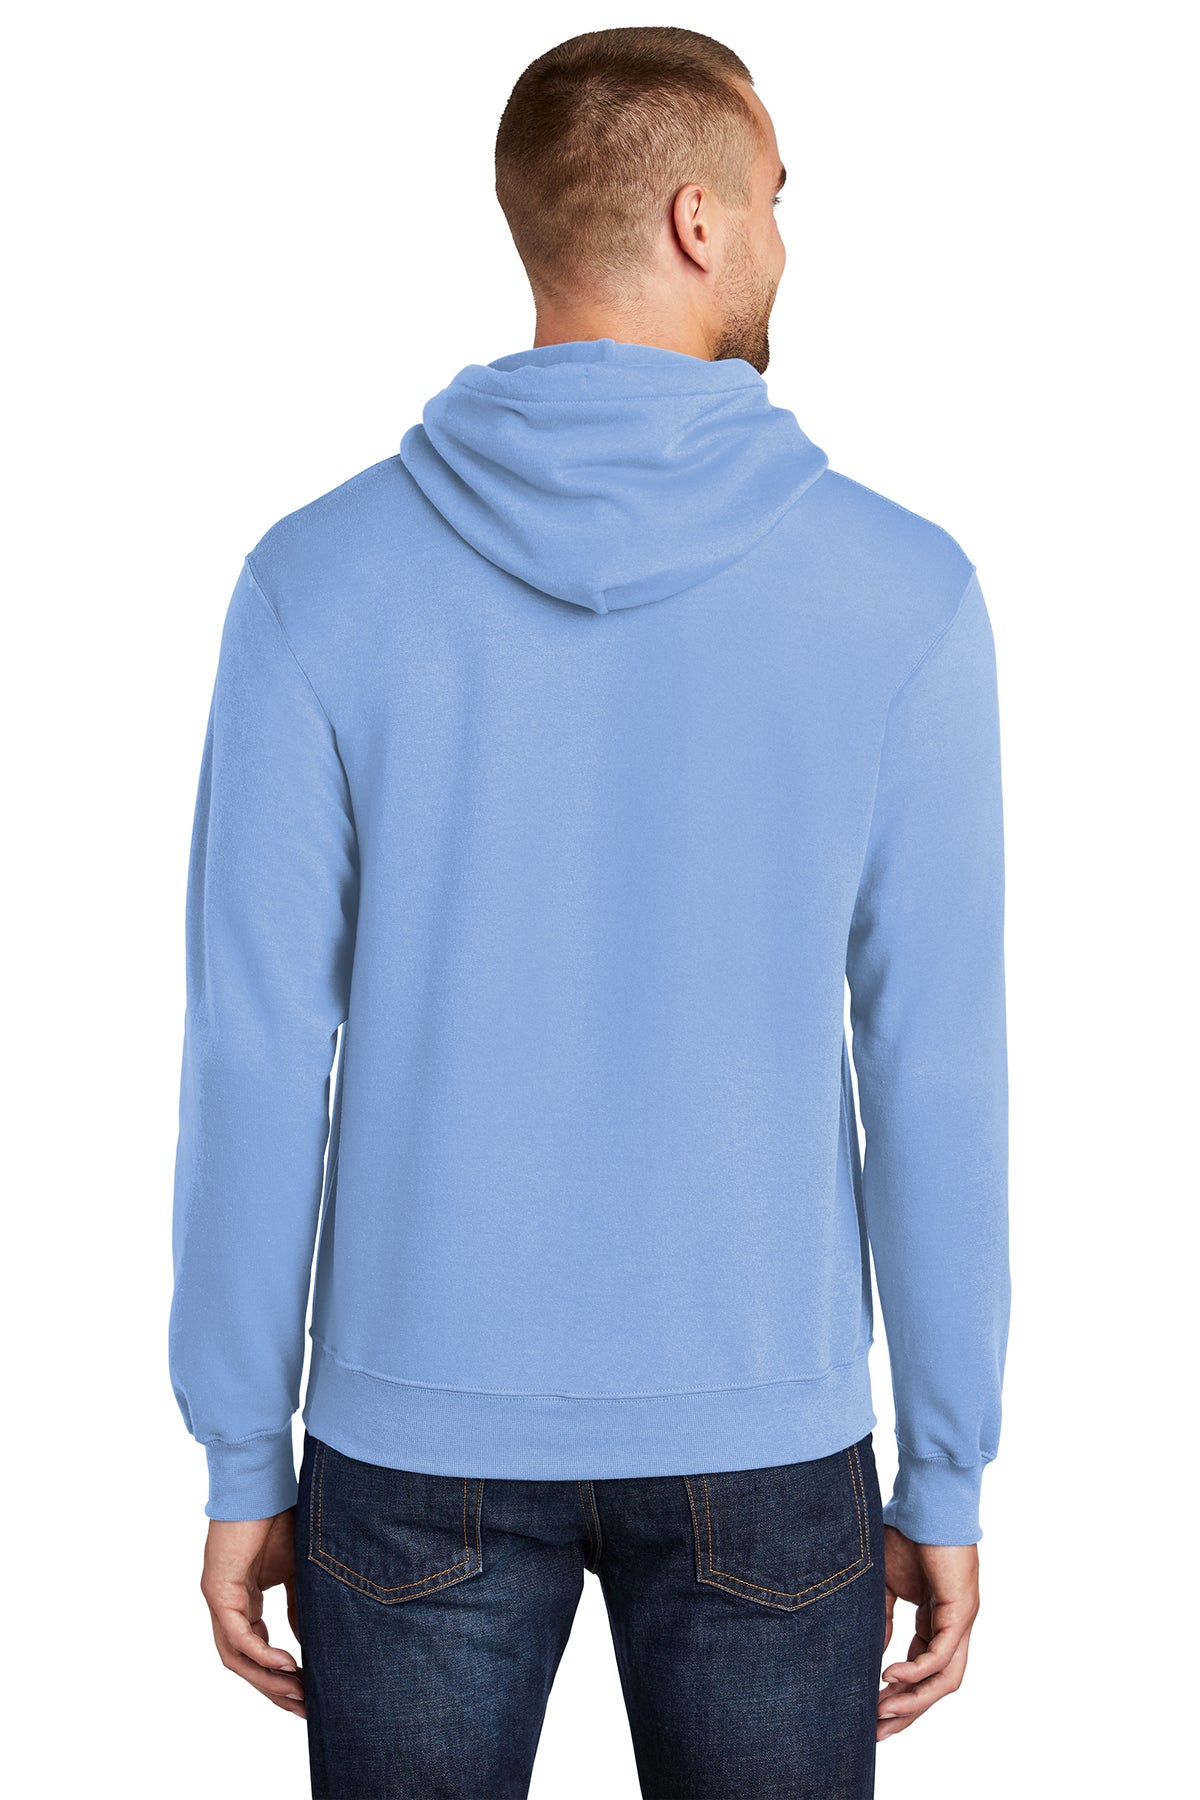 Port & Company PC78H Mens Core Fleece Hooded Sweatshirt Hoodie Light Blue Back